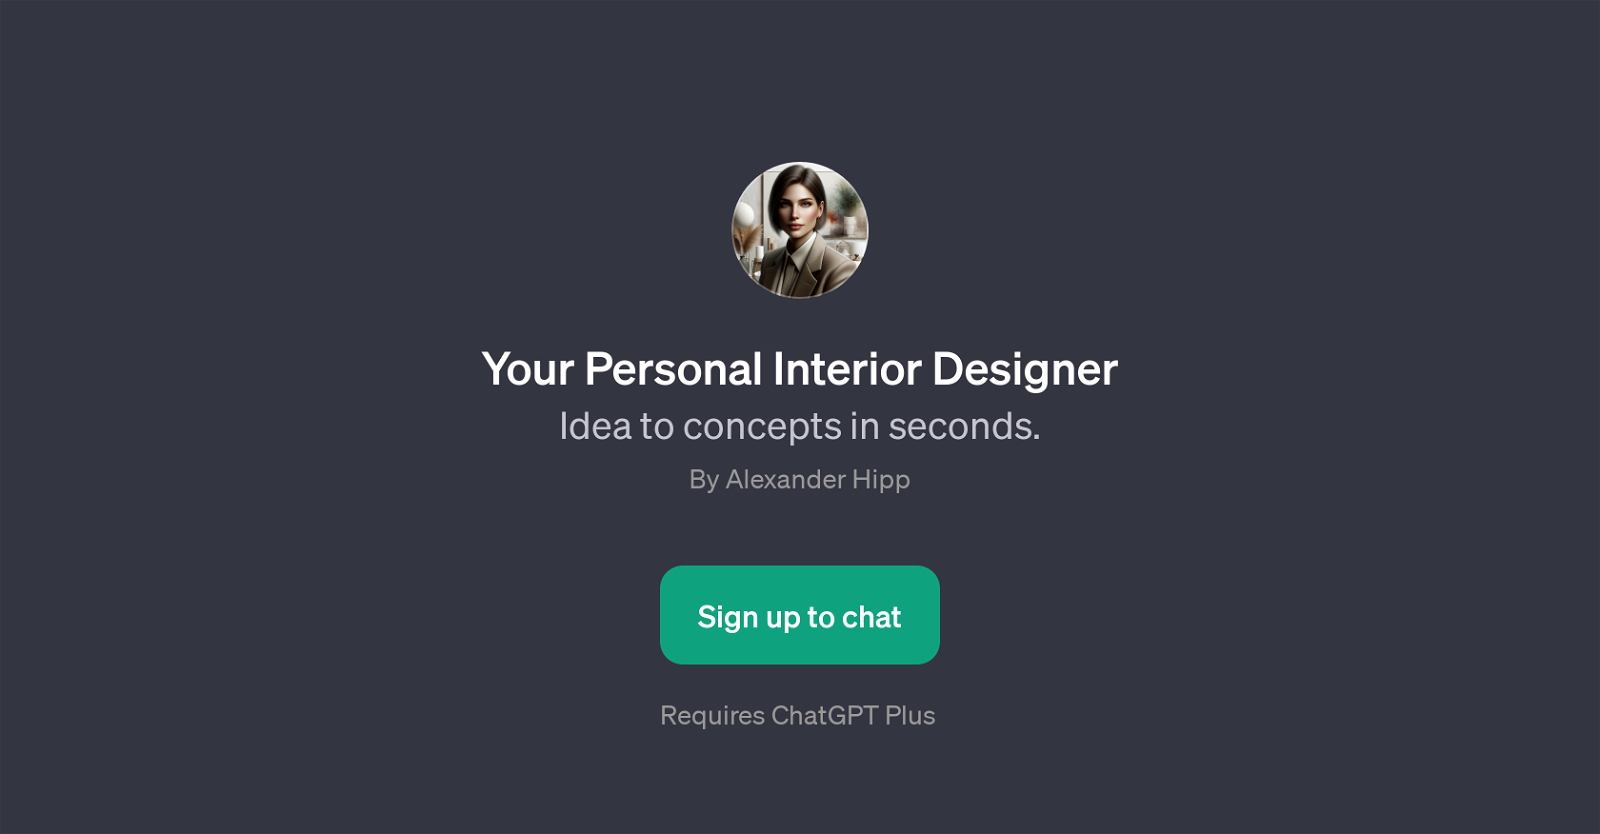 Your Personal Interior Designer website